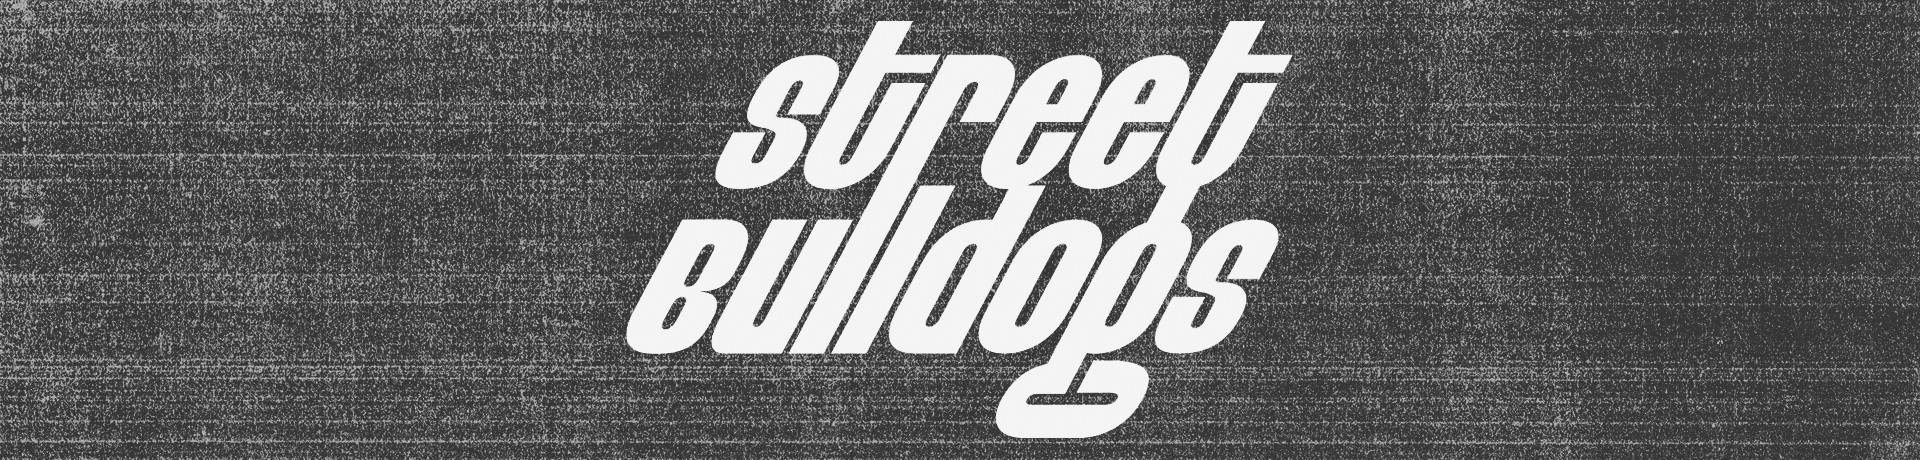 Street Bulldogs - Logo [Soft Hoodie]